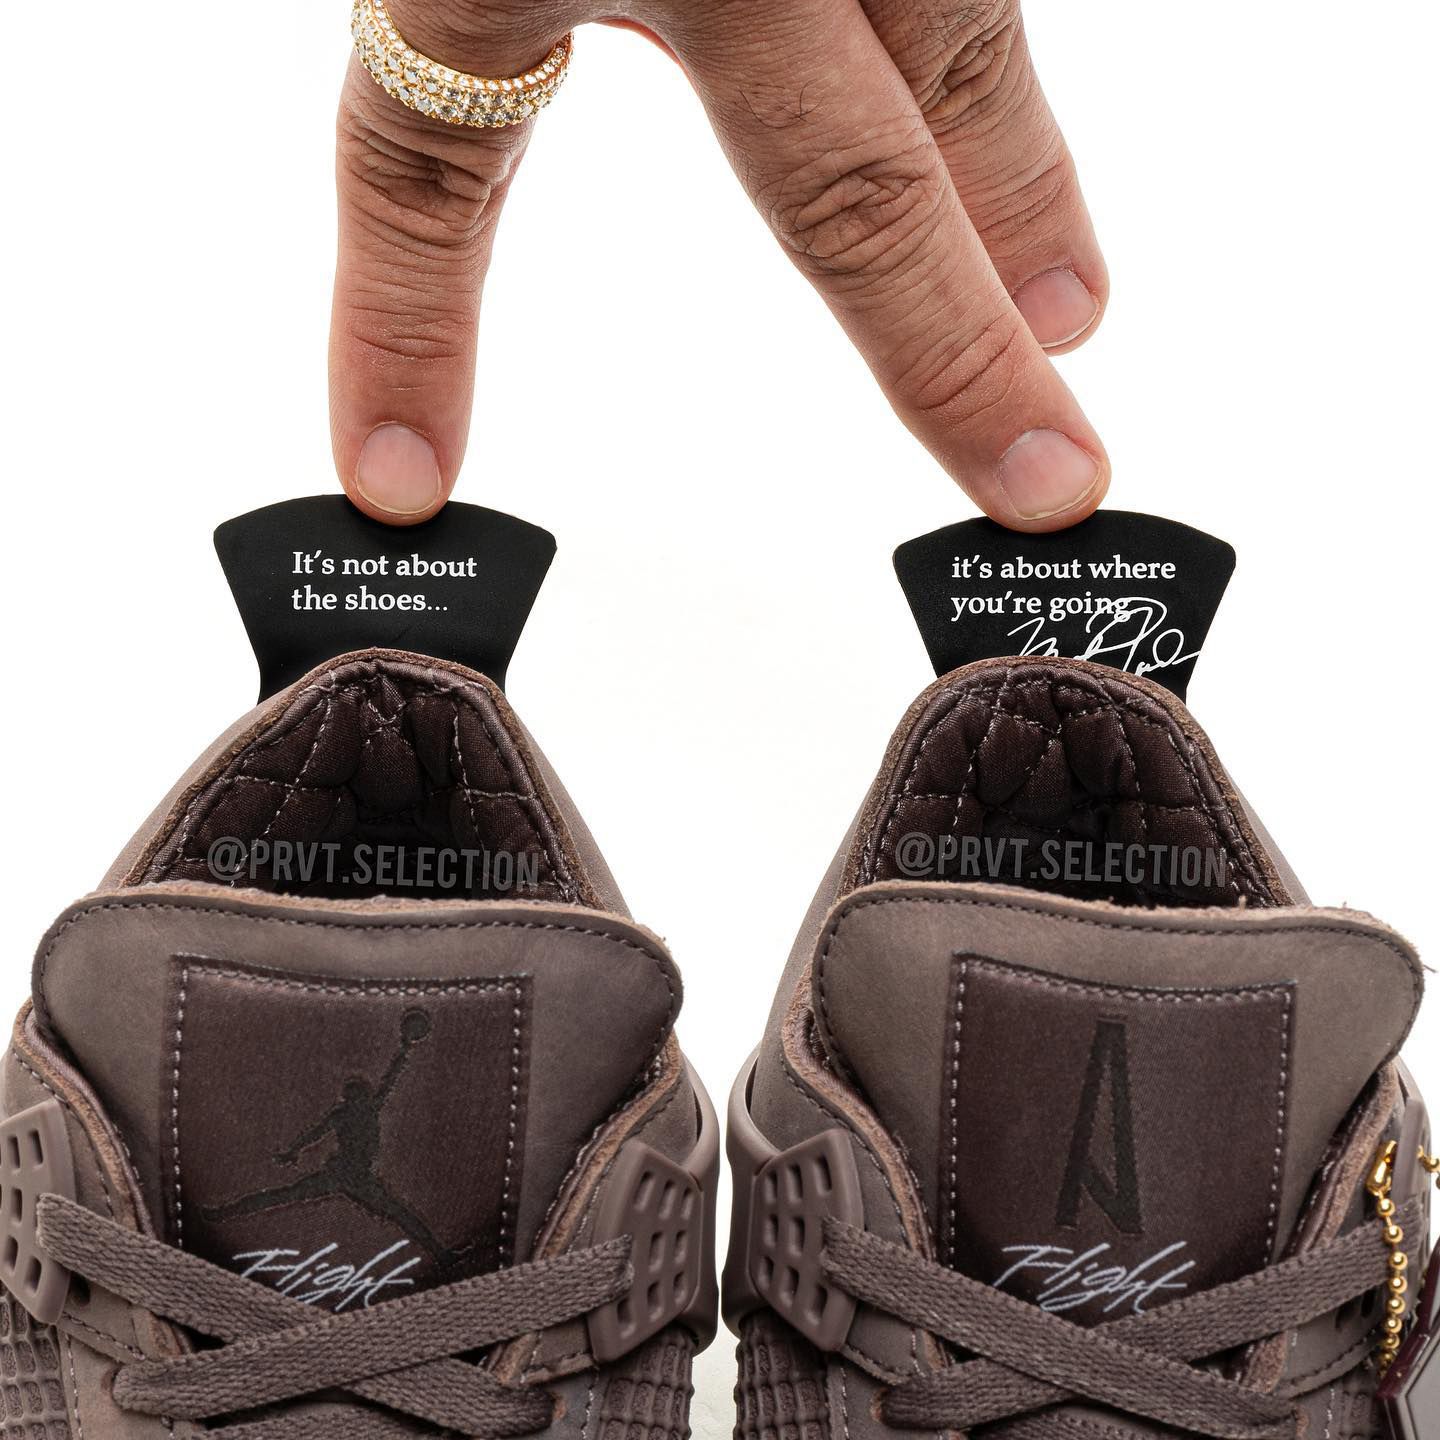 Nike Air Vapormax 97 Ao4542001 Top Deals - The A Ma Maniére X Air Jordan 4  Is Arriving This Week! - Sadtushops